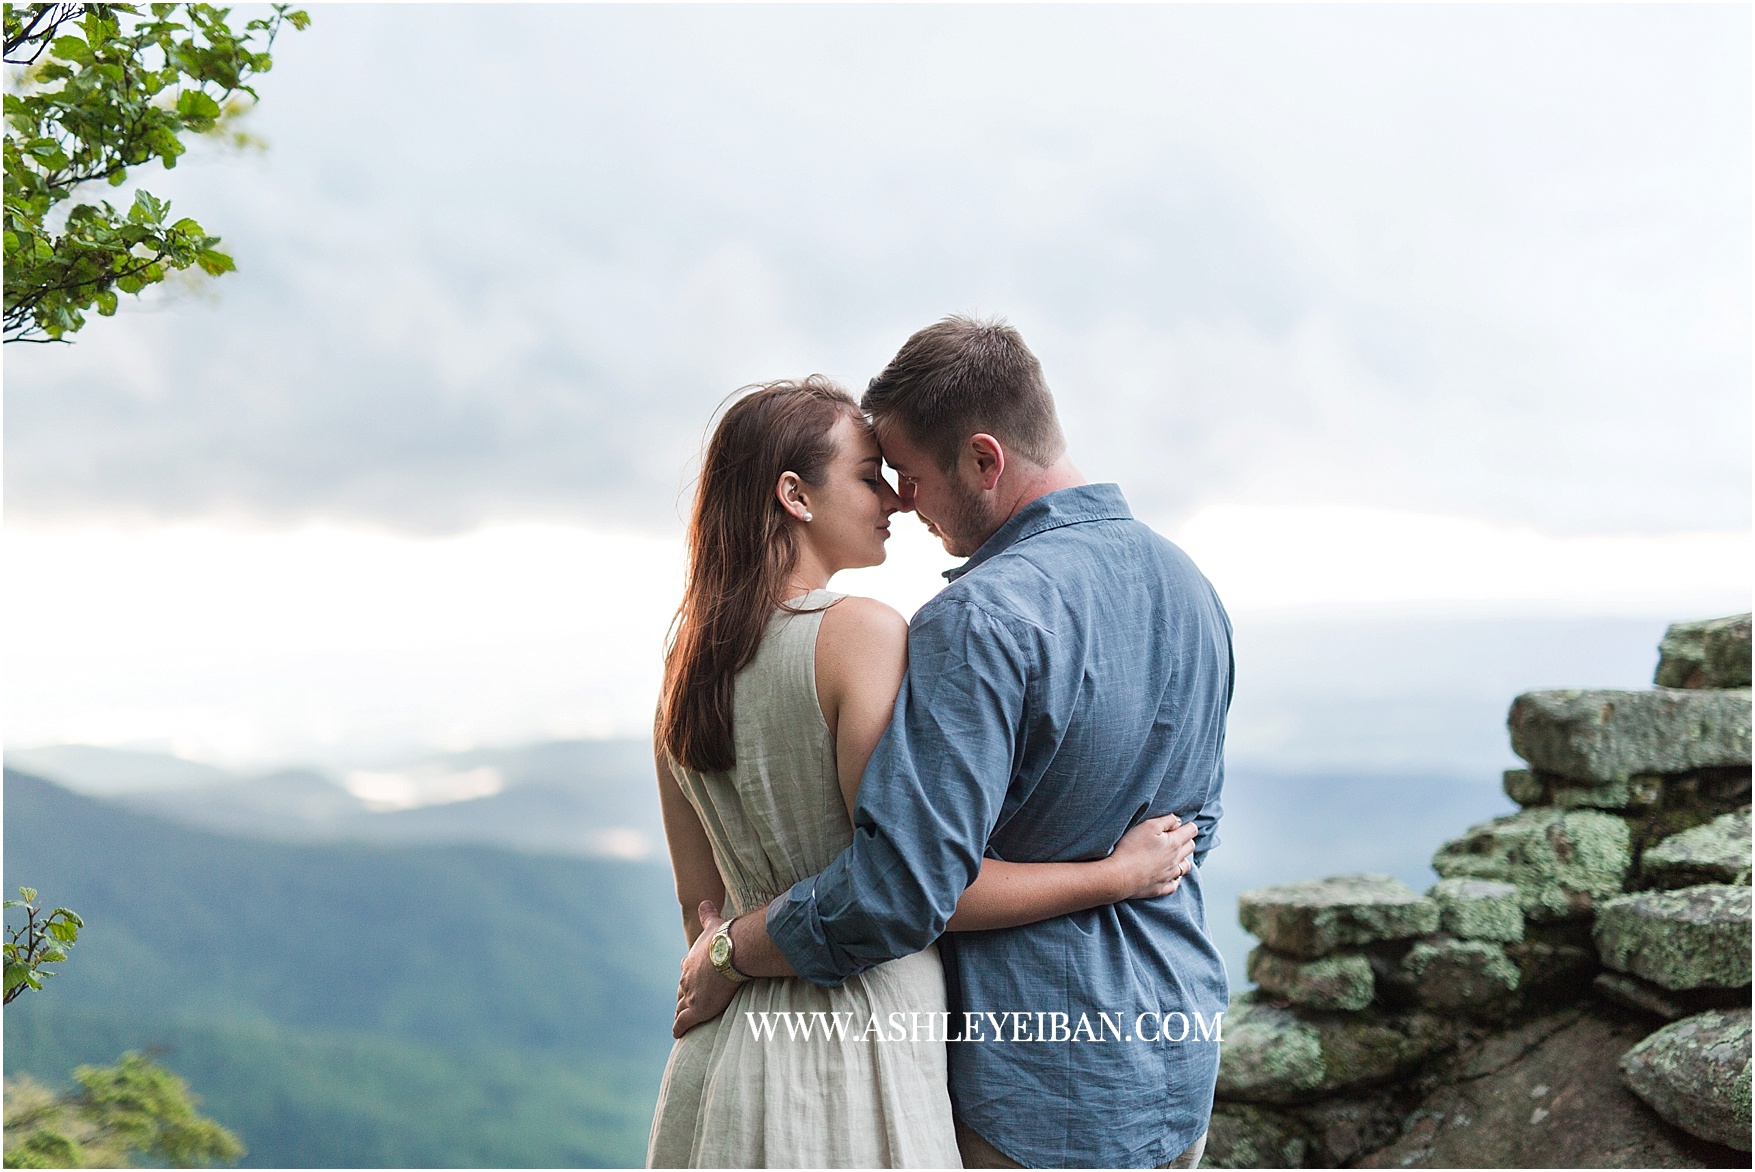 Mountaintop Engagement Session || Lynchburg Wedding and Engagement Photographer || www.ashleyeiban.com